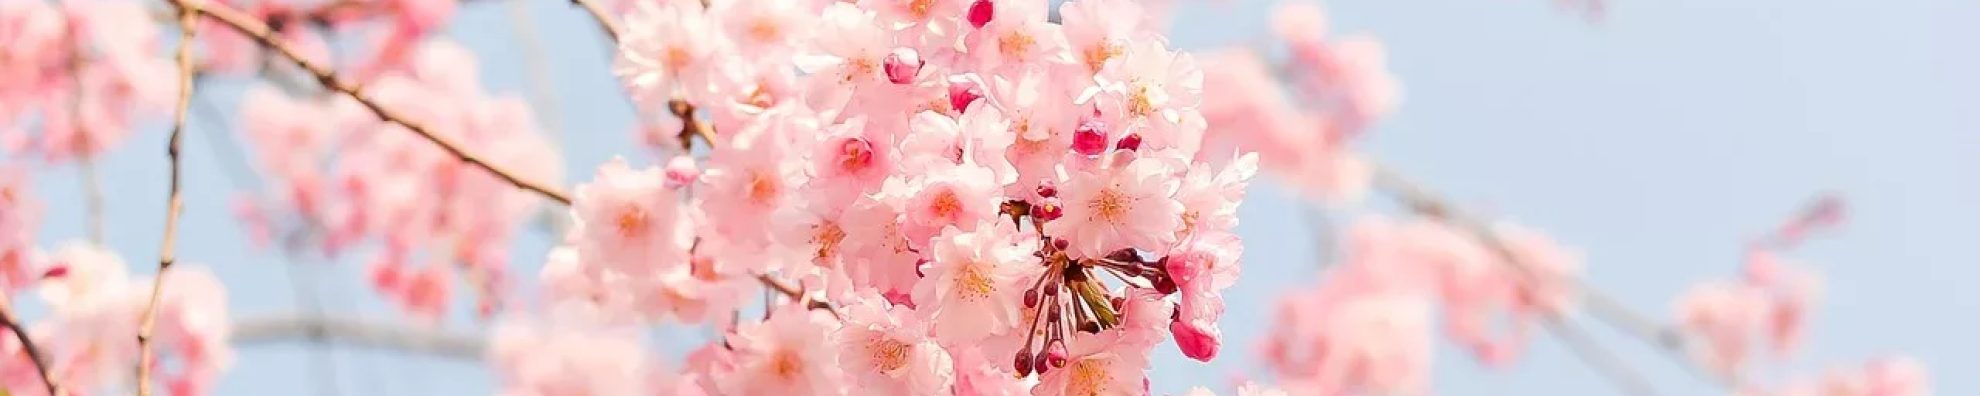 Cherry blossom tree 1225186 1280